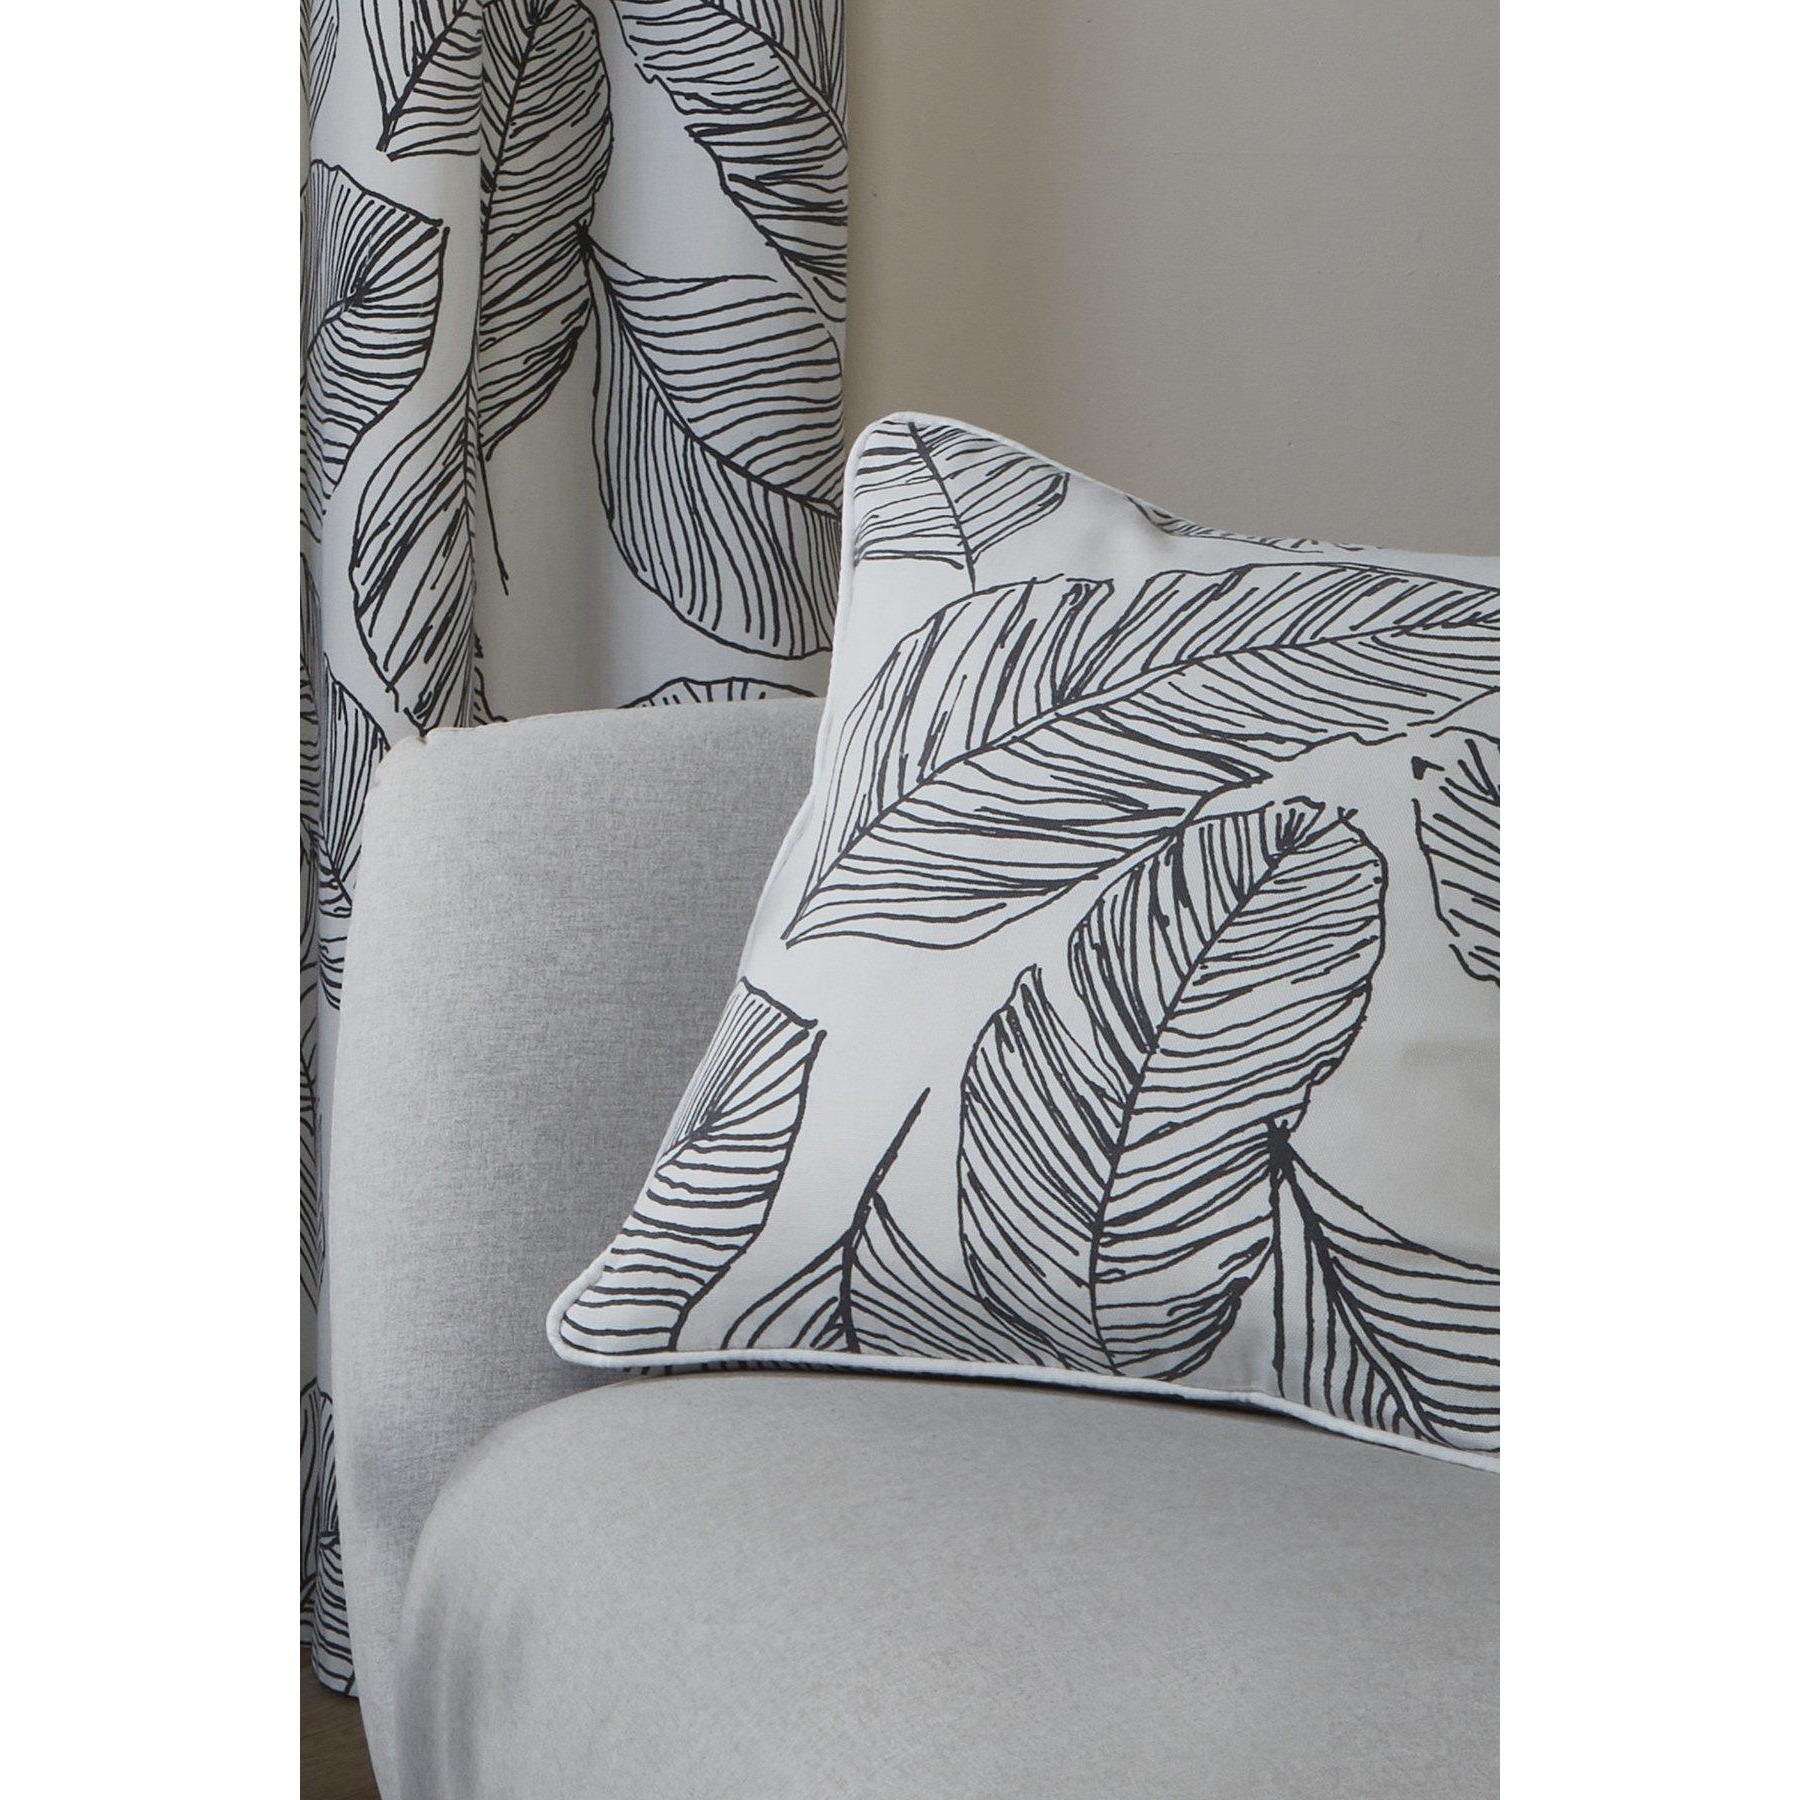 'Matteo' Hand Drawn Leaf Print Filled Cushion 100% Cotton - image 1